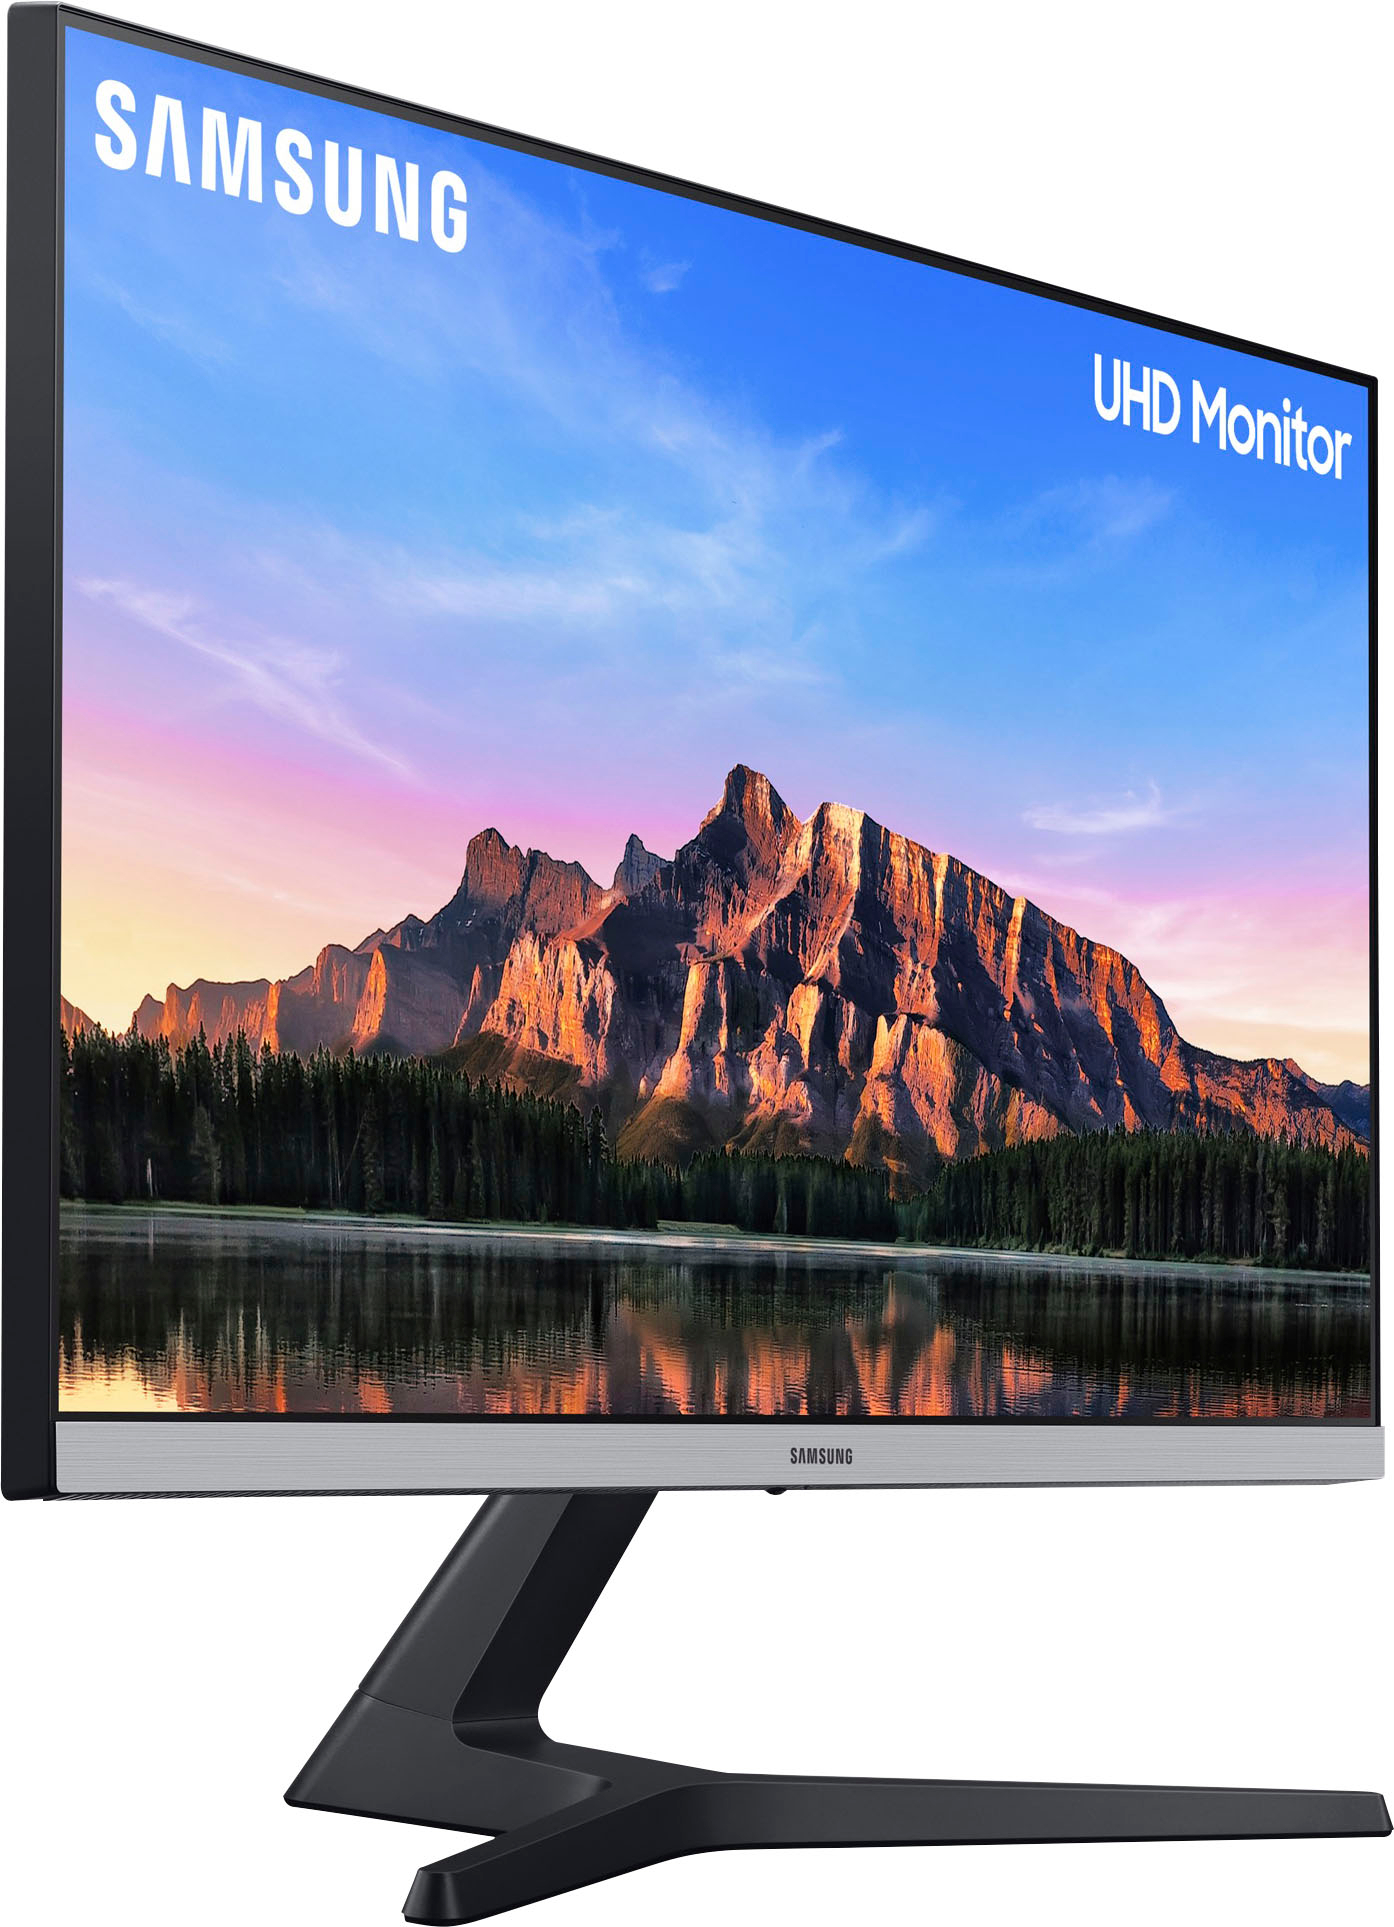 Samsung 28” ViewFinity UHD IPS AMD FreeSync with HDR Monitor Black  LU28R550UQNXZA - Best Buy